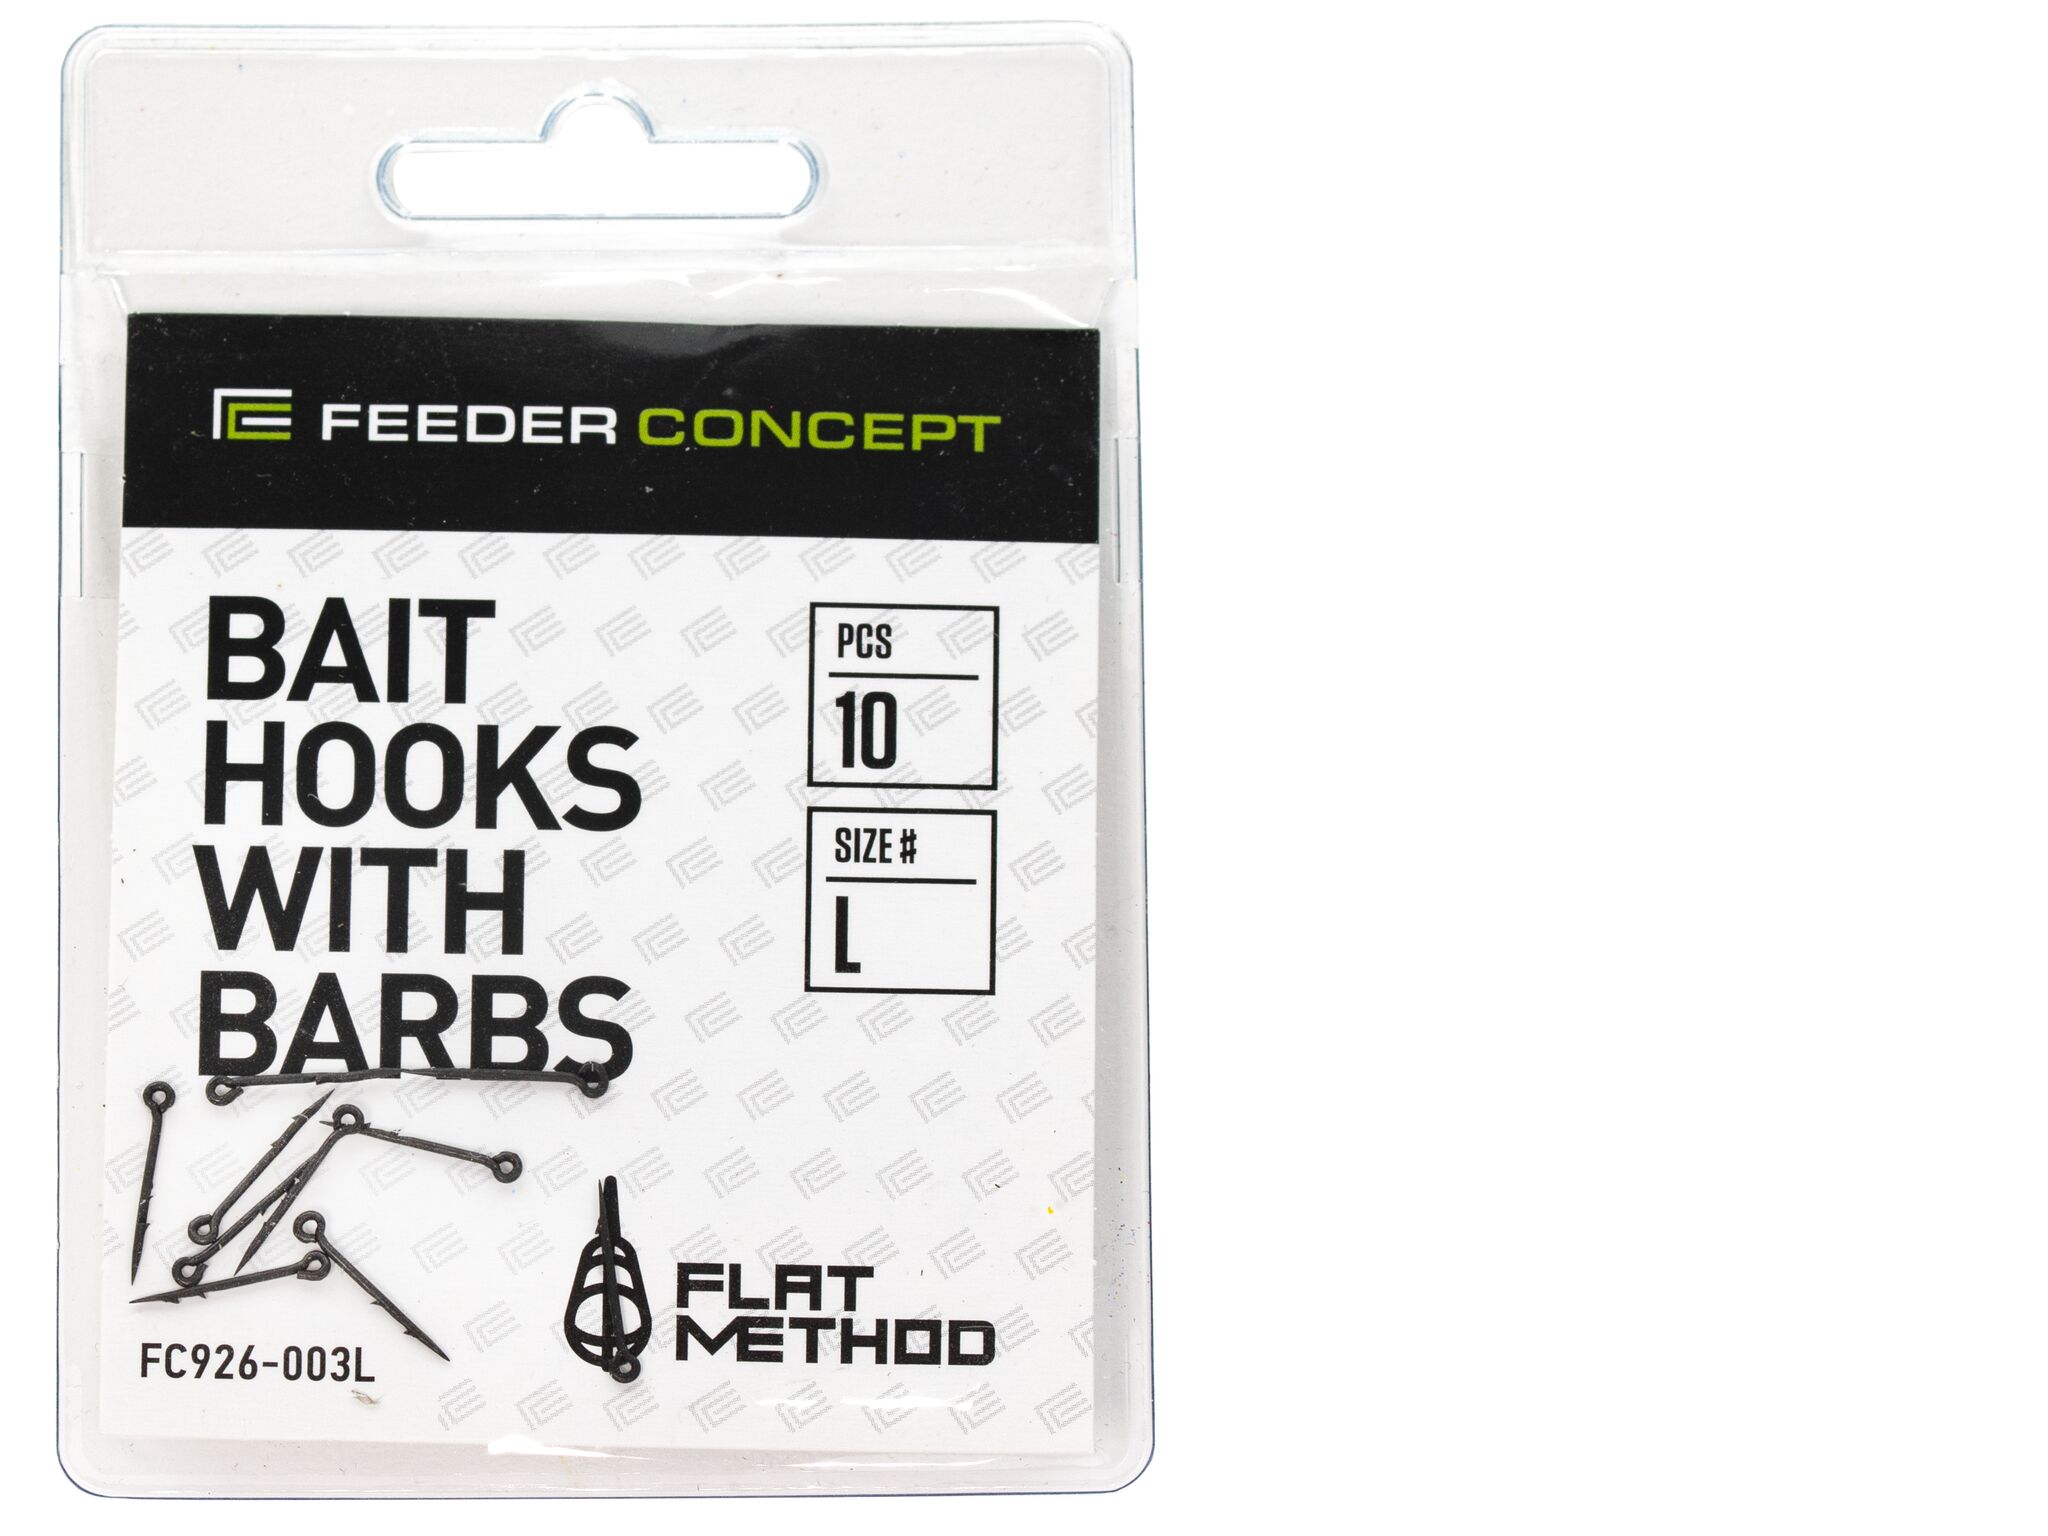 Шипы для бойлов/приманок Feeder Concept Flat Method BAIT HOOKS WITH BARBS р,001S 10шт.